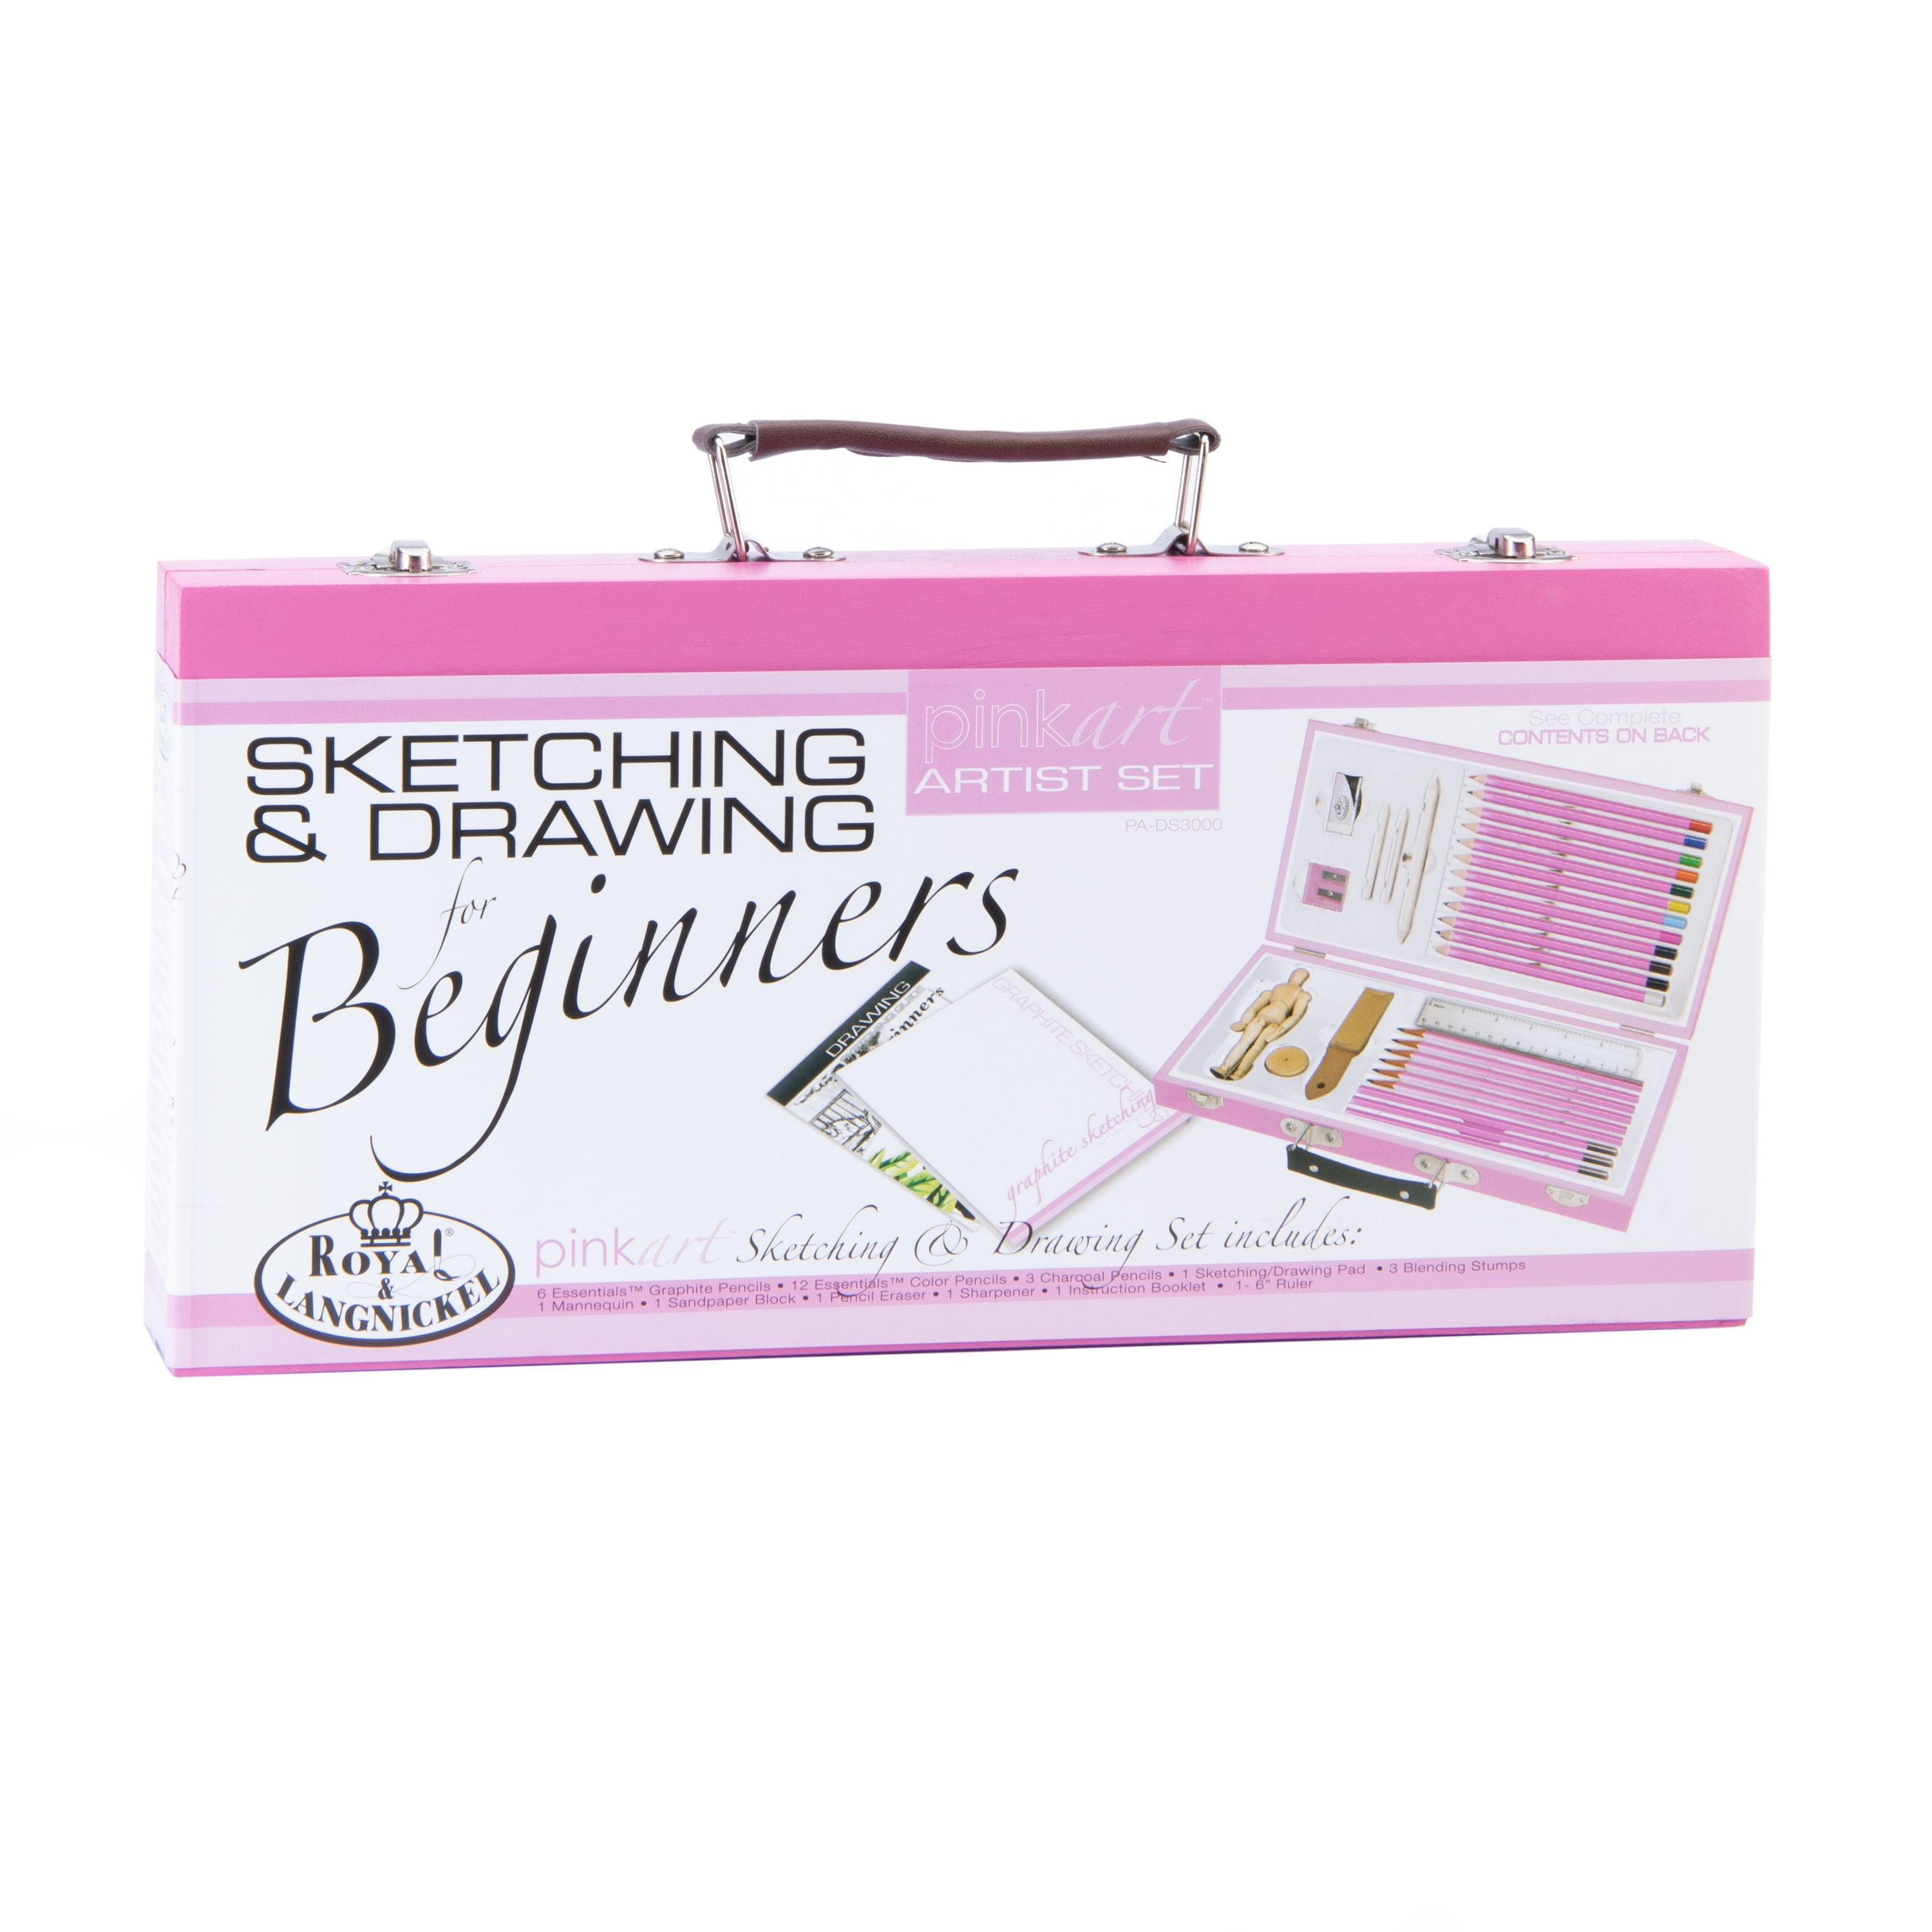 Royal & Langnickel Pink Art Artist Set for Beginners-Sketching Drawing